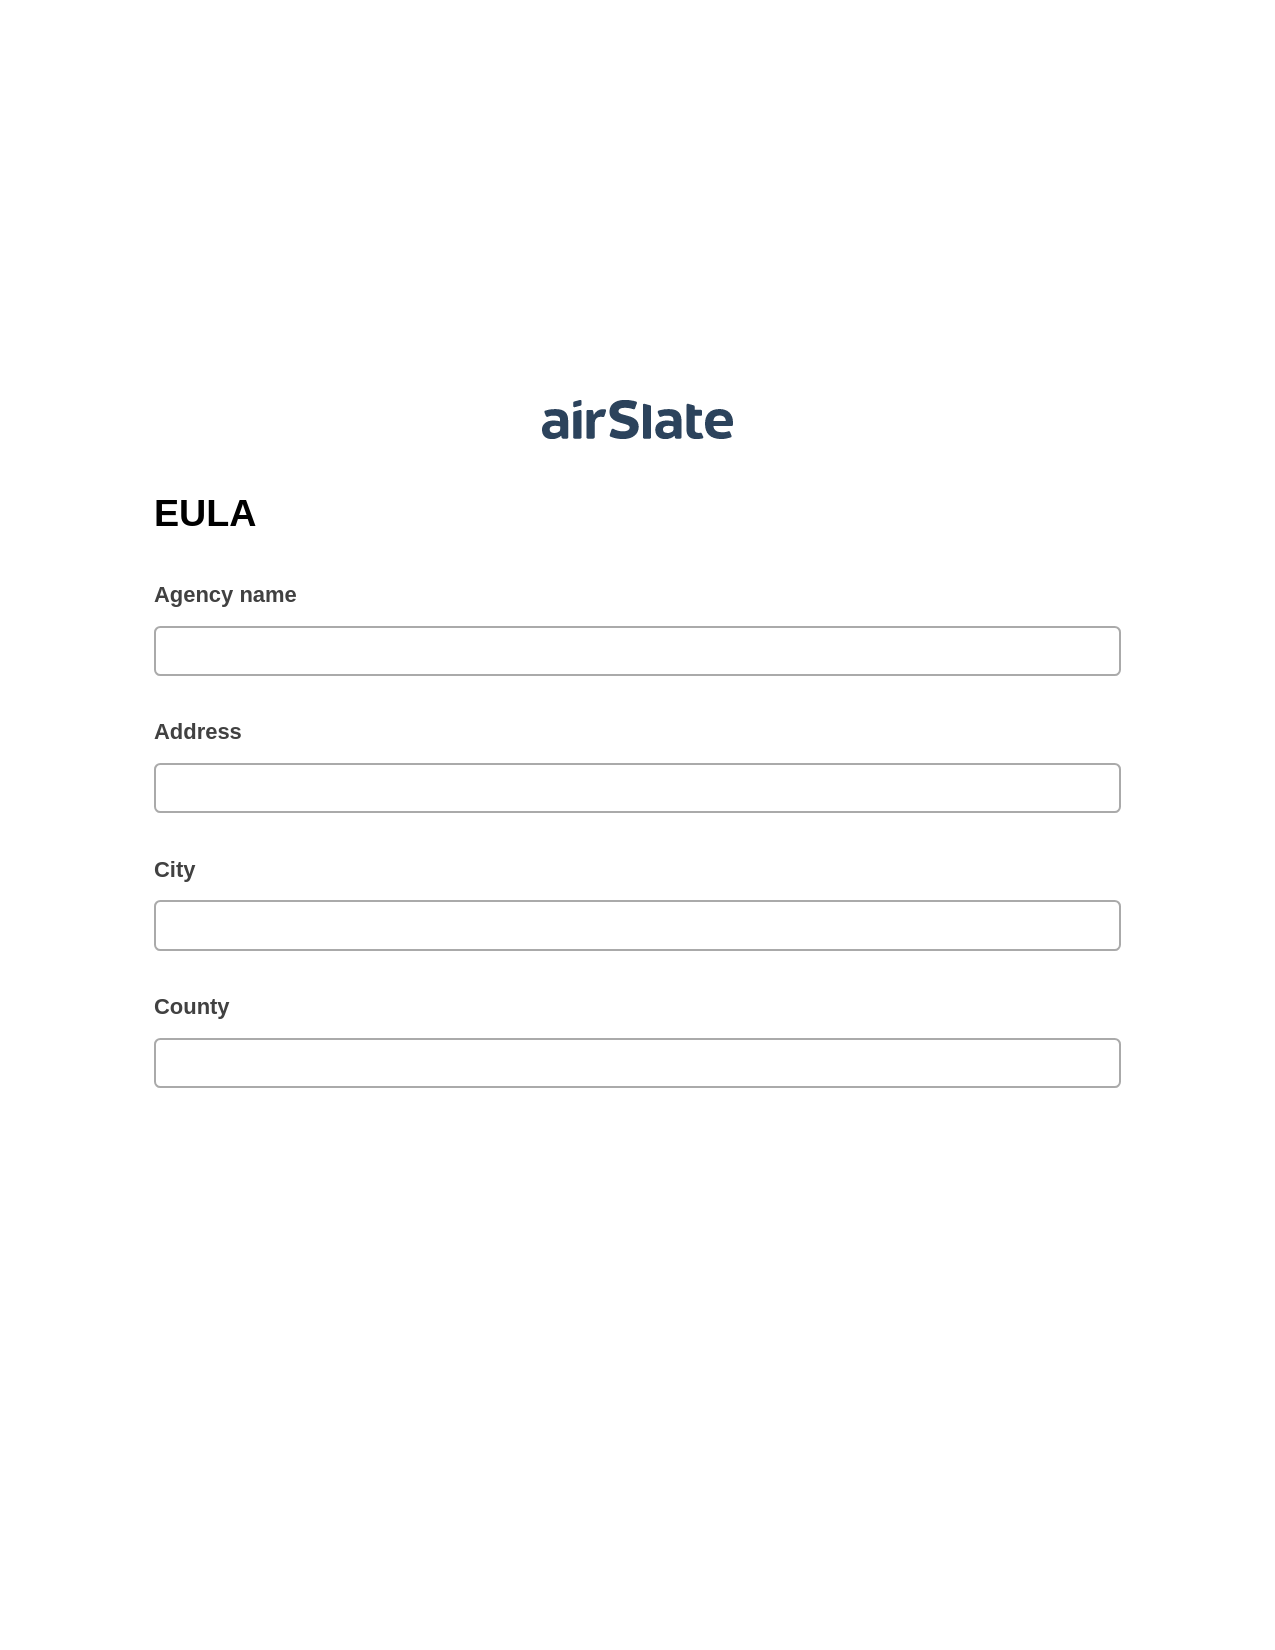 EULA Pre-fill from CSV File Bot, SendGrid send Campaign bot, Export to Google Sheet Bot